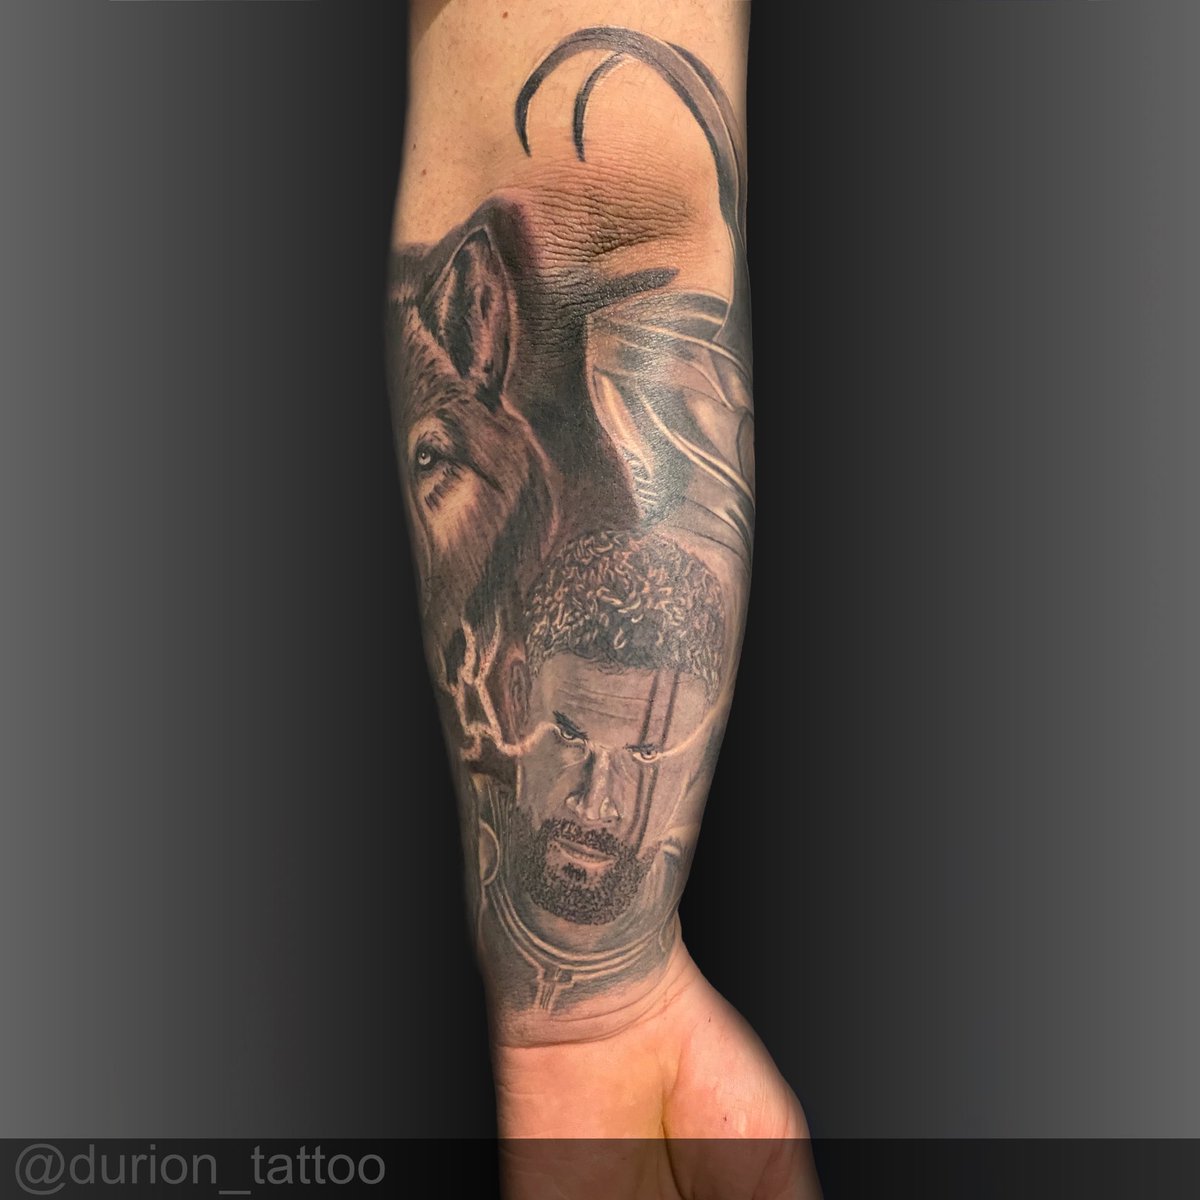 Healed
#tattoo #tetovani #tetovaniostrava #ostrava #czech #tattooartist #durion #duriontattoo #tetovaniopava #opava #brno #praha #marvel #avenger #avengers #thor #ChrisHemsworth #healed #healedtattoo https://t.co/KWziwXh2bJ